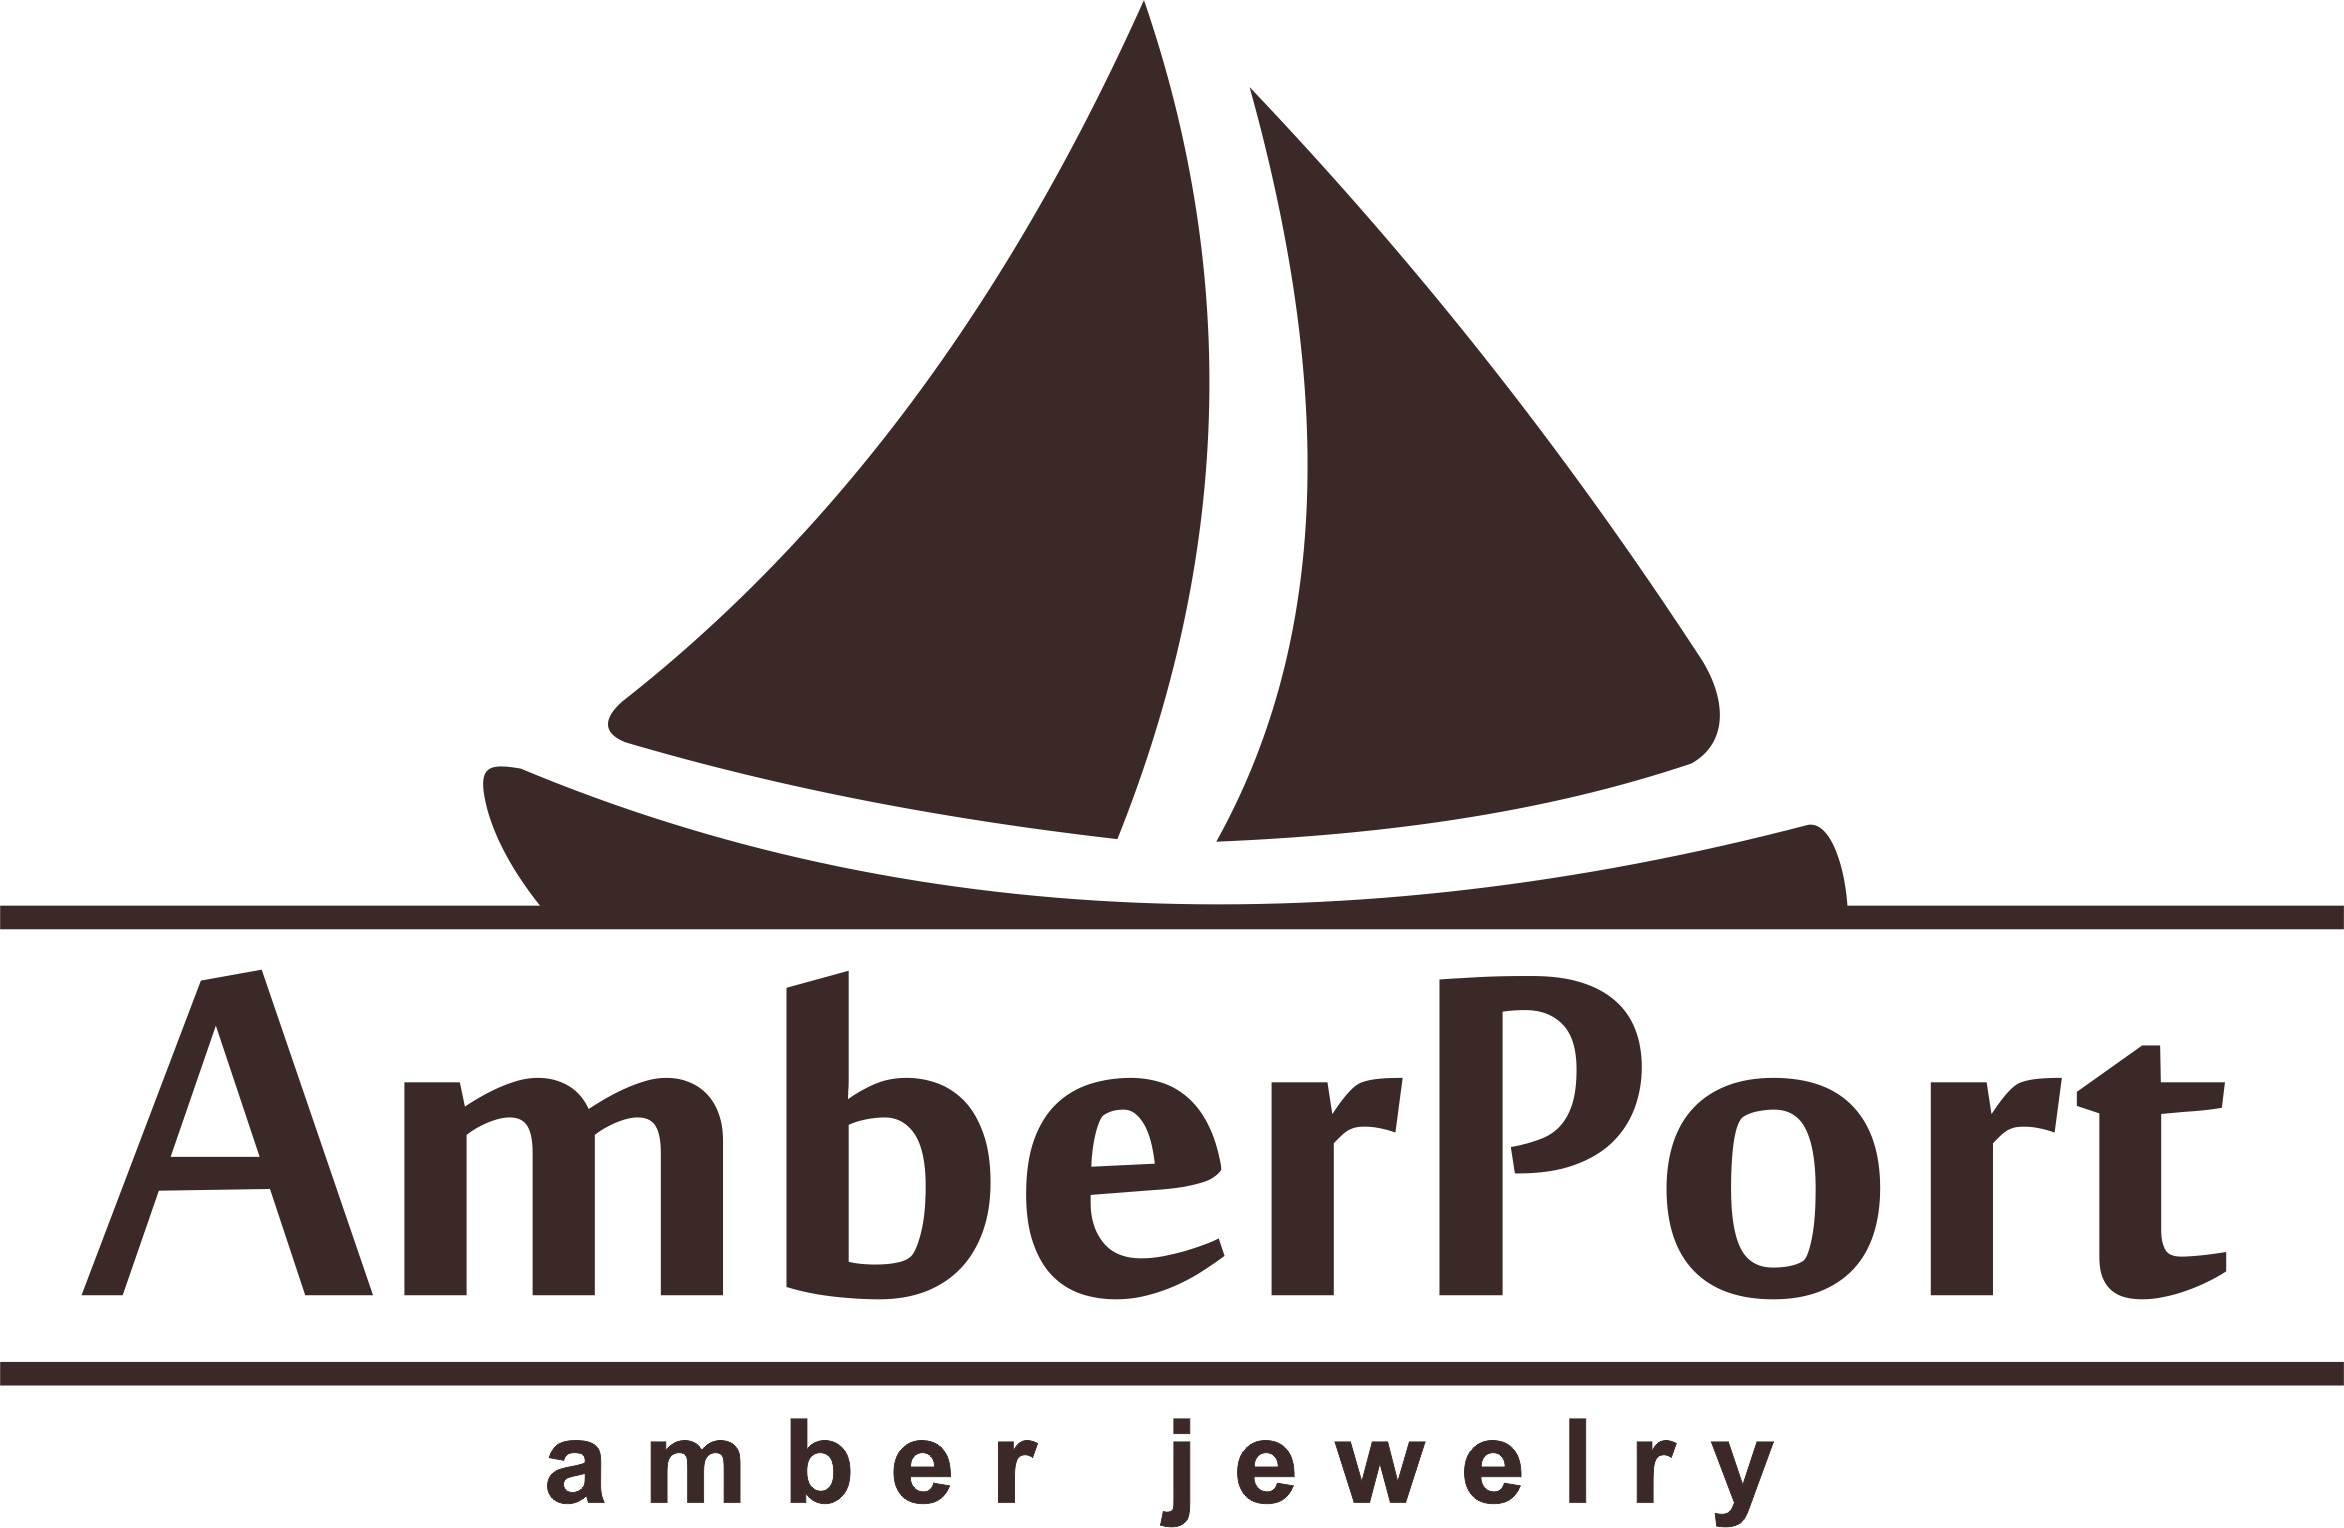 Logo AMBER PORT - AMBERIF